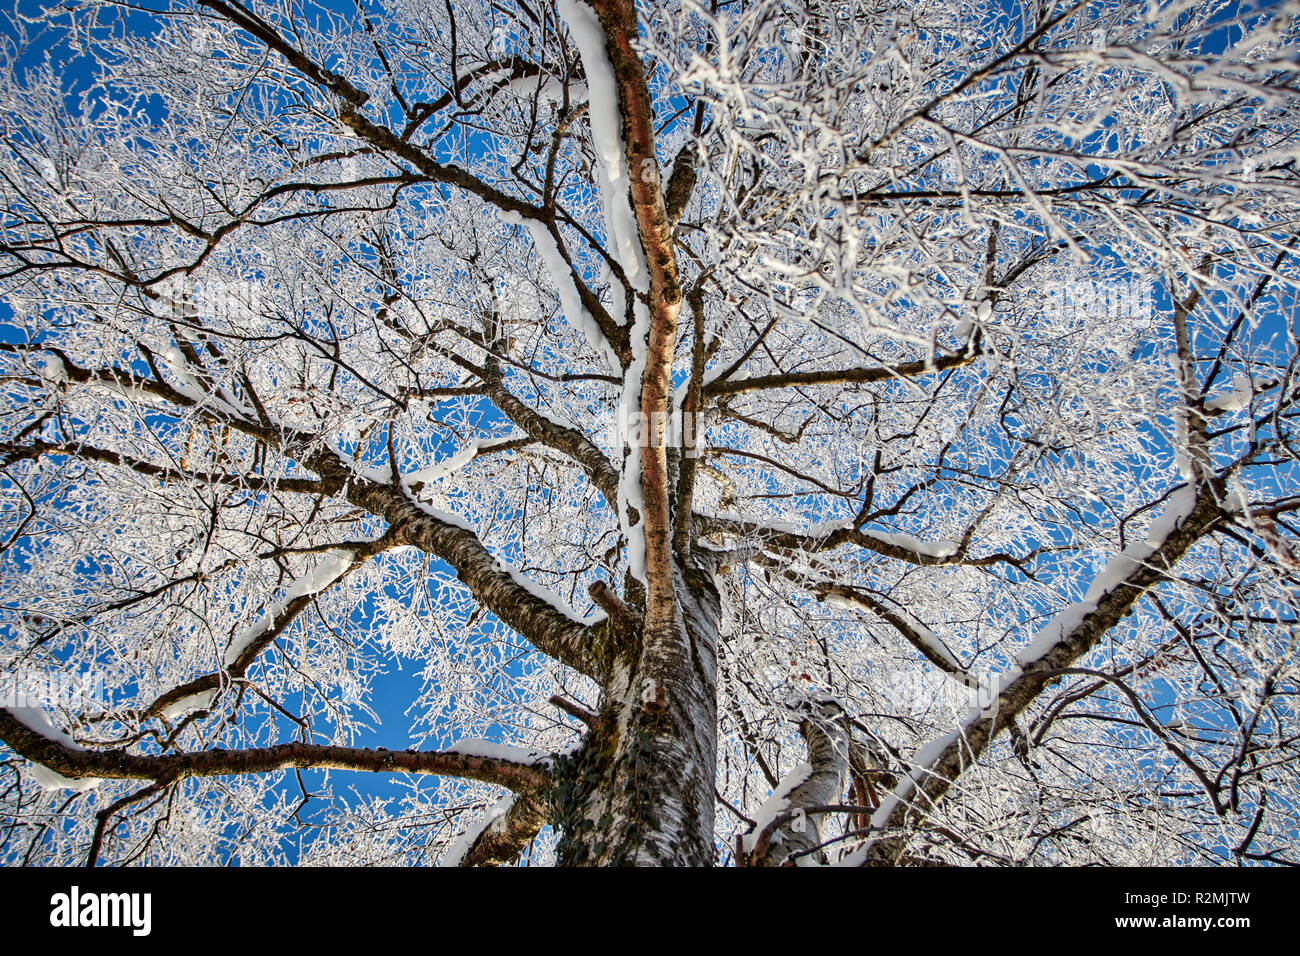 Snow-covered tree, birch, worm's eye view Stock Photo